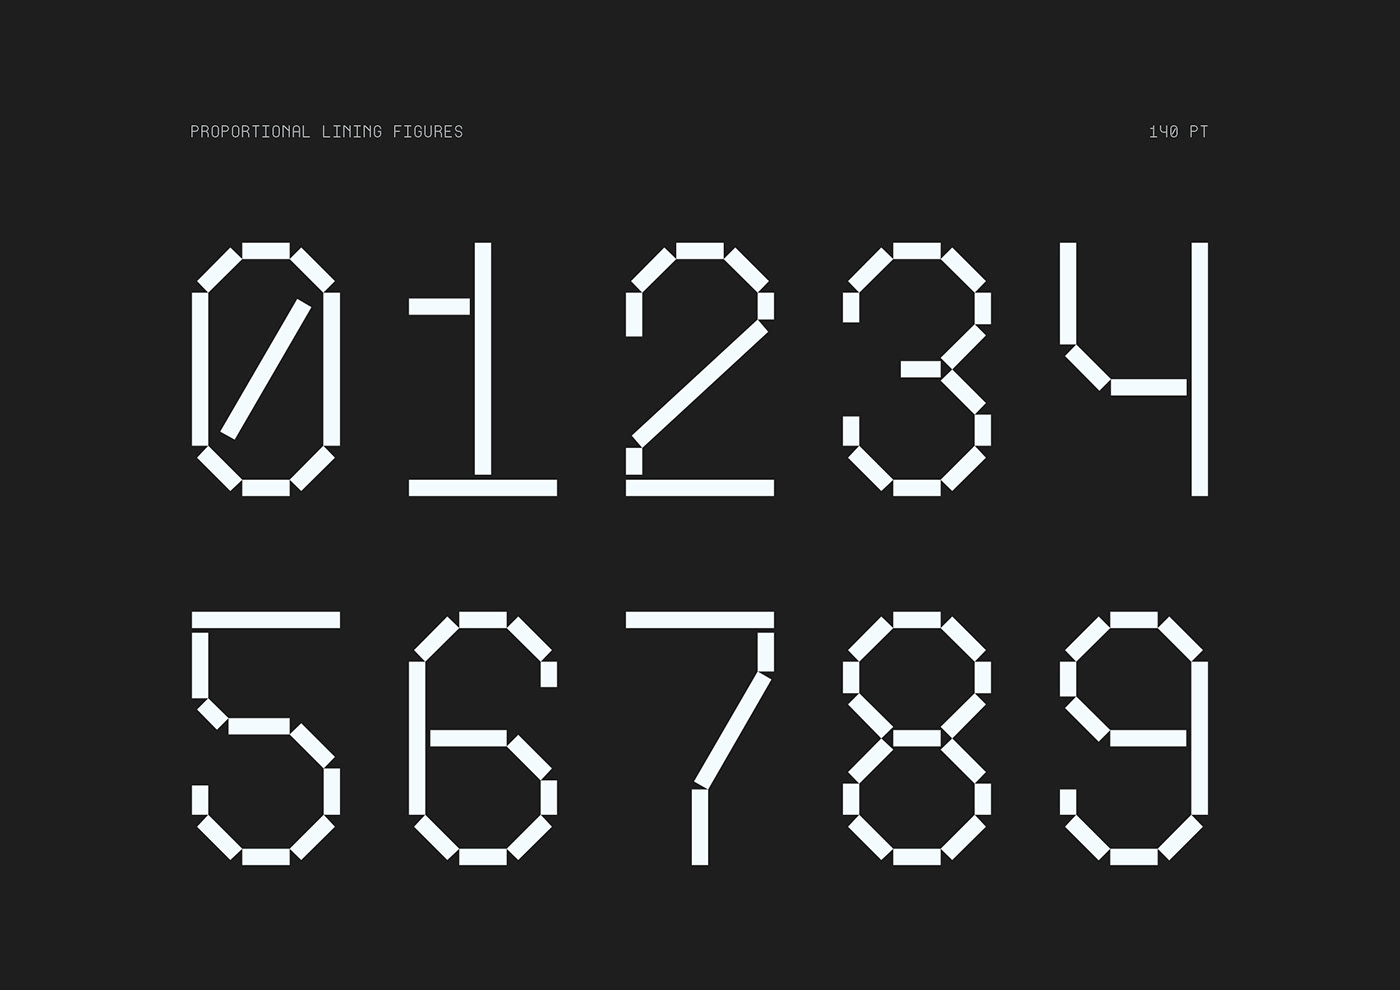 atk studio display font krom krom mono krom mono font krom mono typeface monospaced pixelated font radinal riki Variable Font